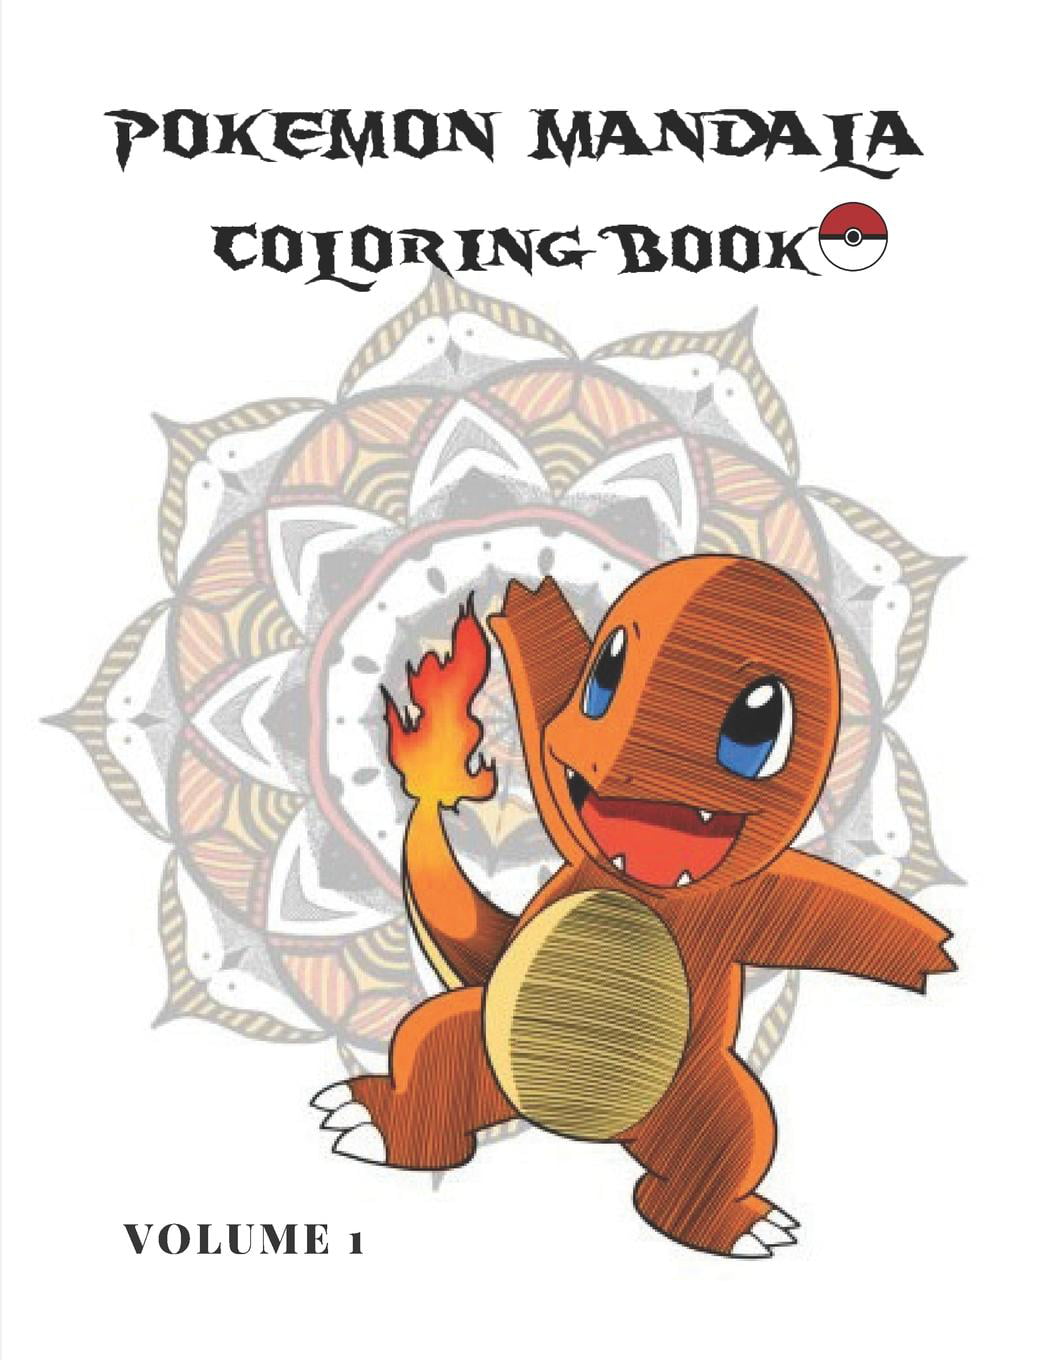 Pokemon: Colouring Kit: 9781743838167: : Books